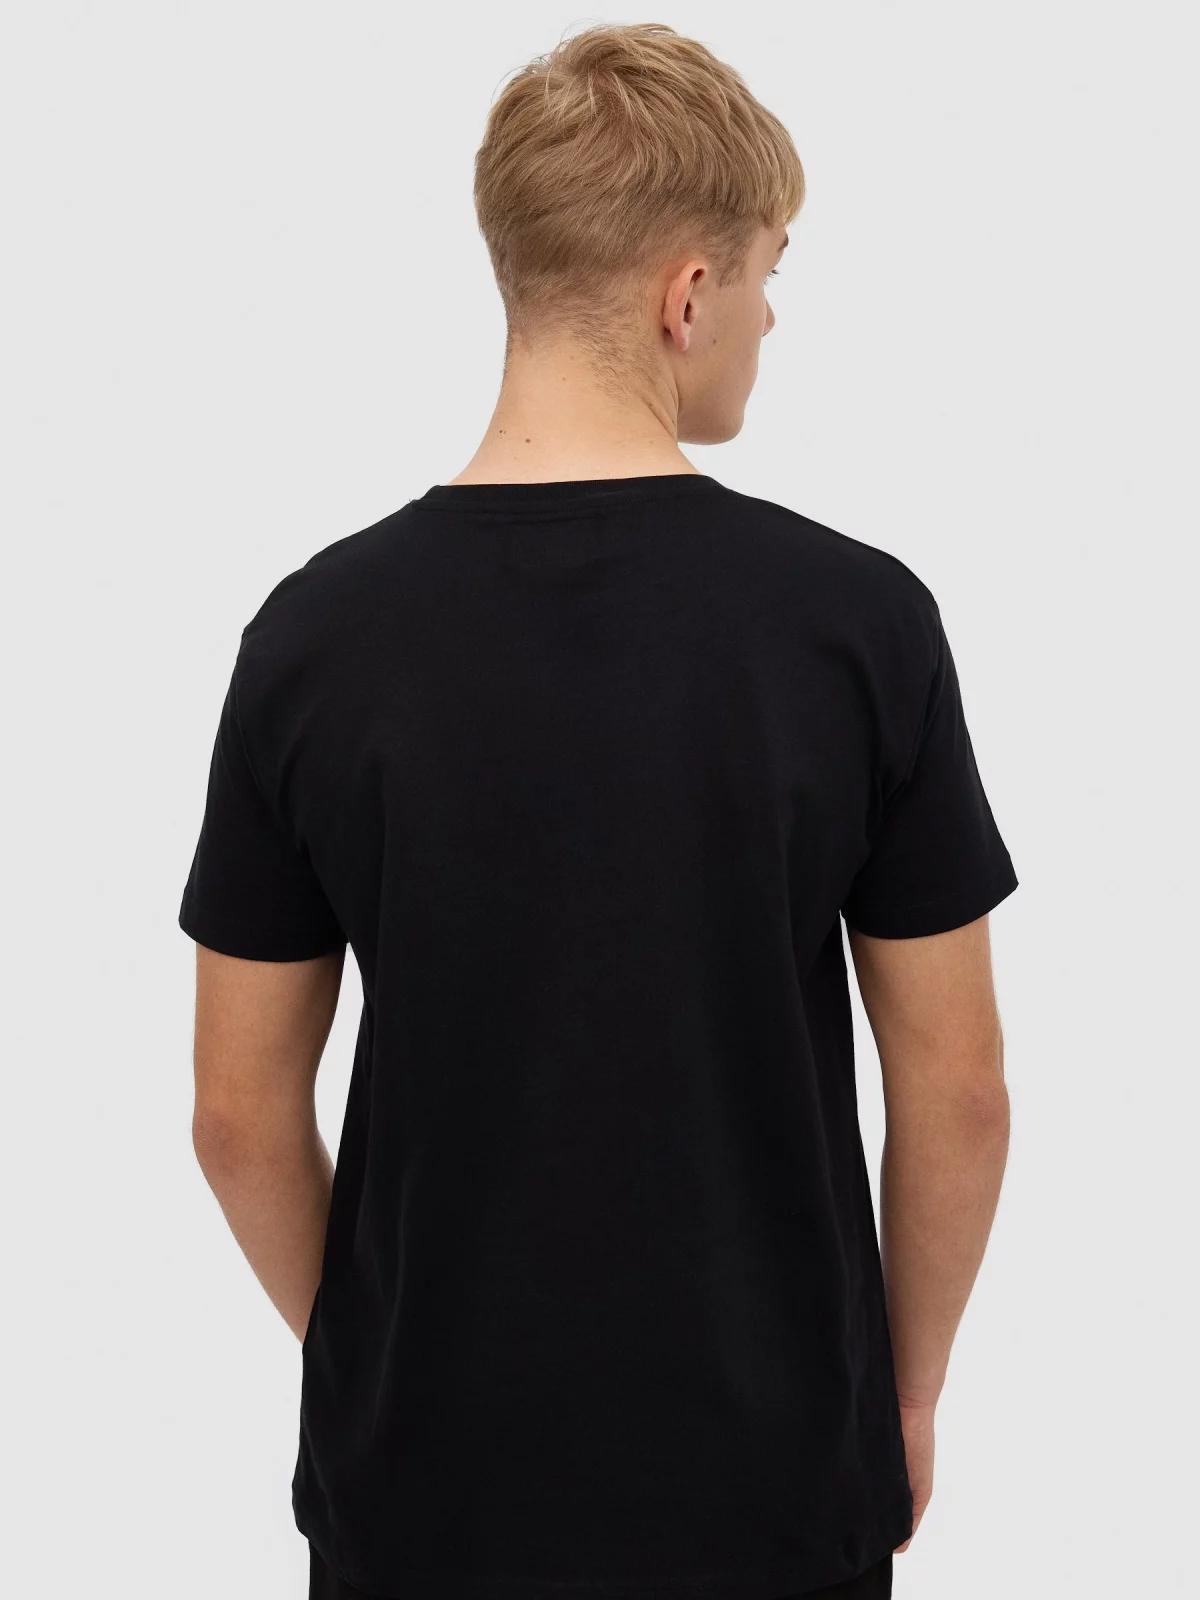 T-shirt "Diluted skull" preto vista meia traseira